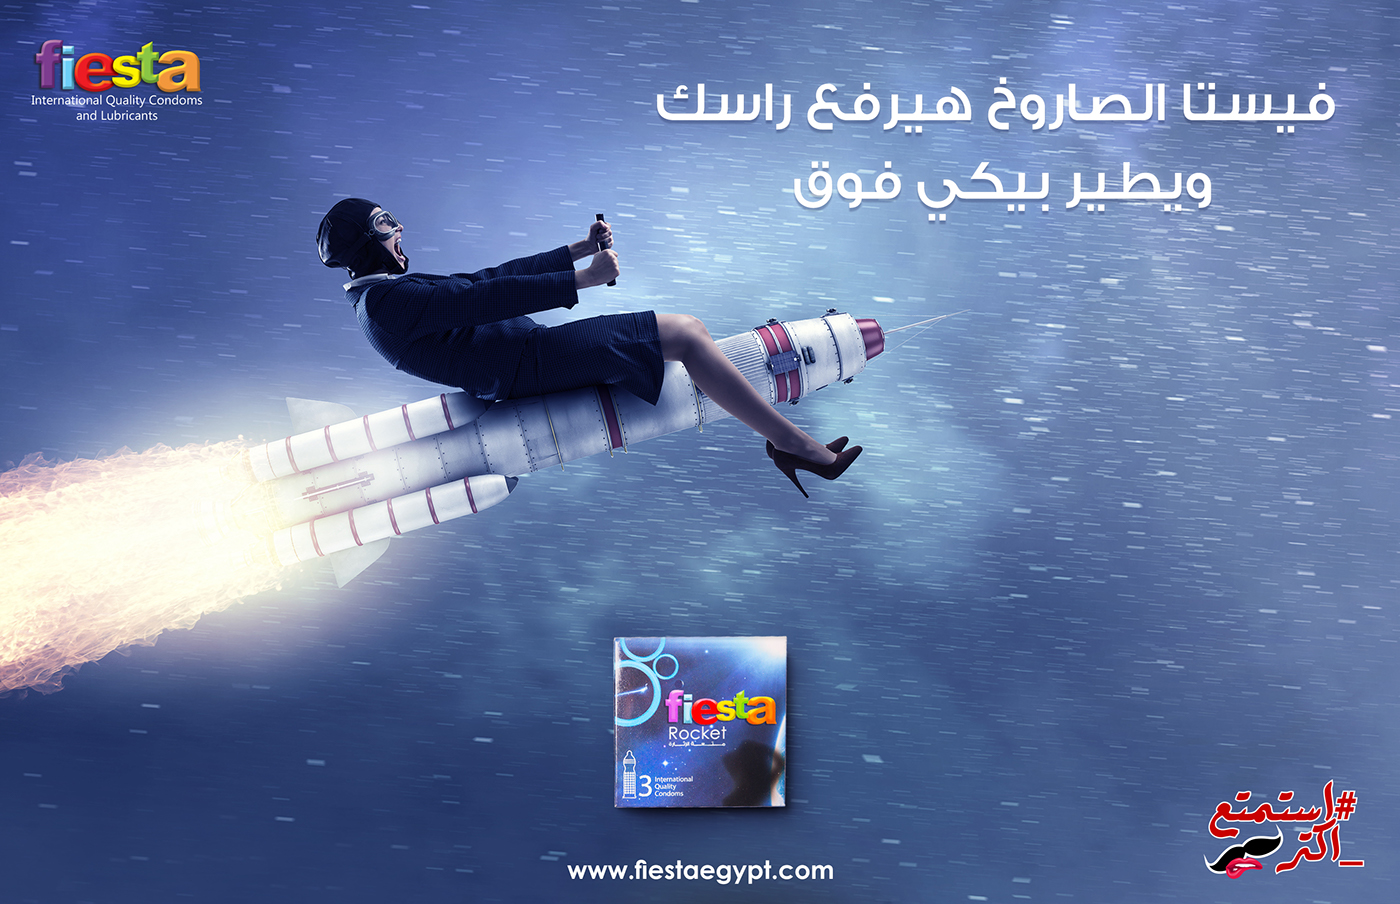 #fiesta_egypt designs digital marketing